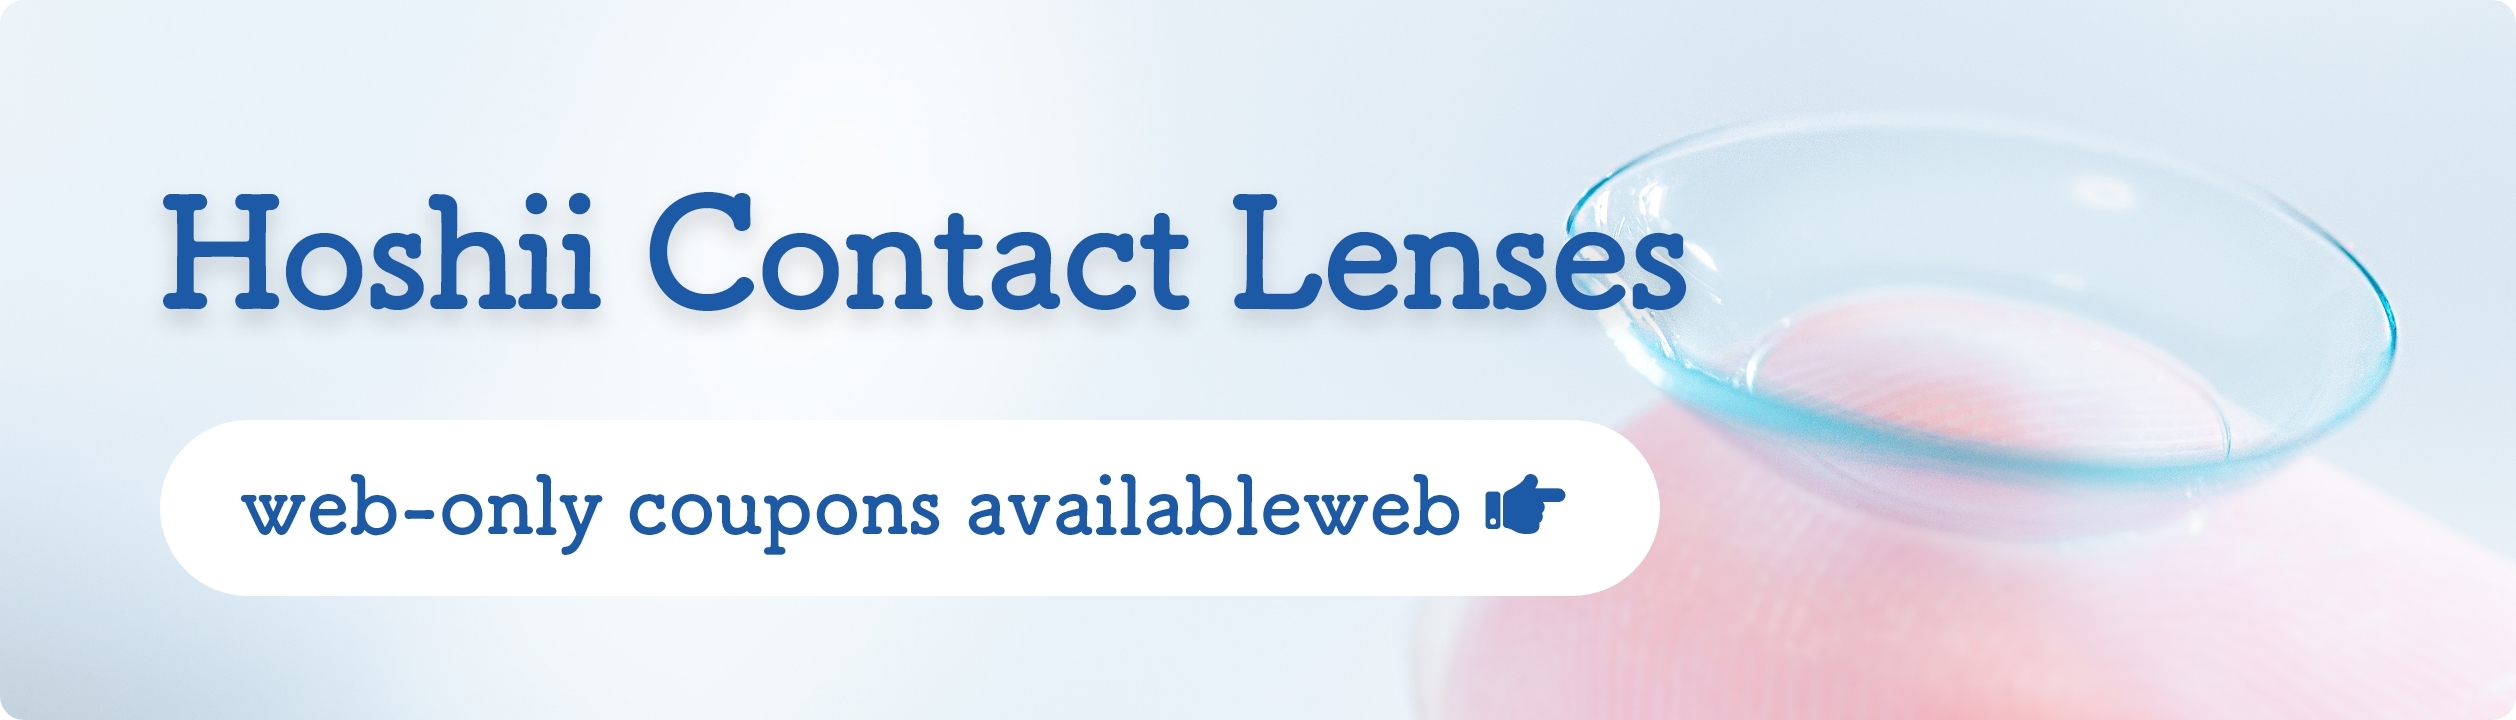 Hoshii Contact Lens Mobile